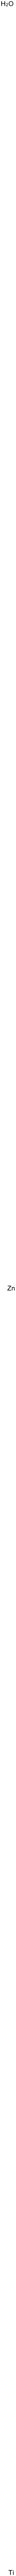 Titanium zinc oxide|